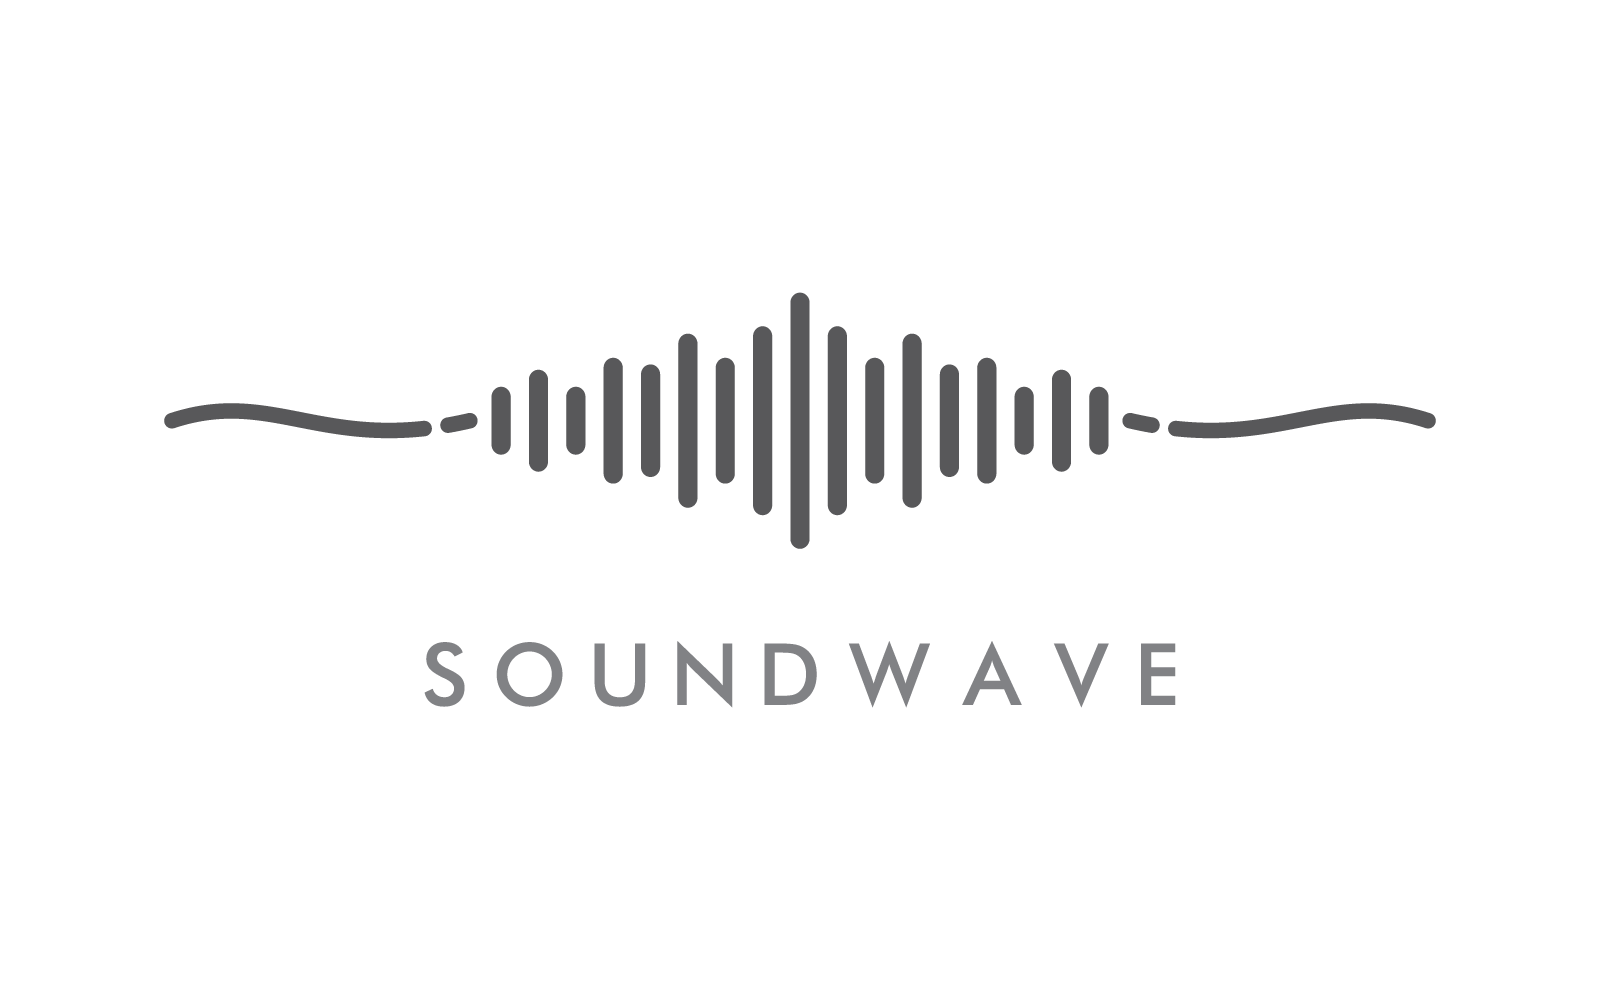 Sound wave music logo vector icon flat design